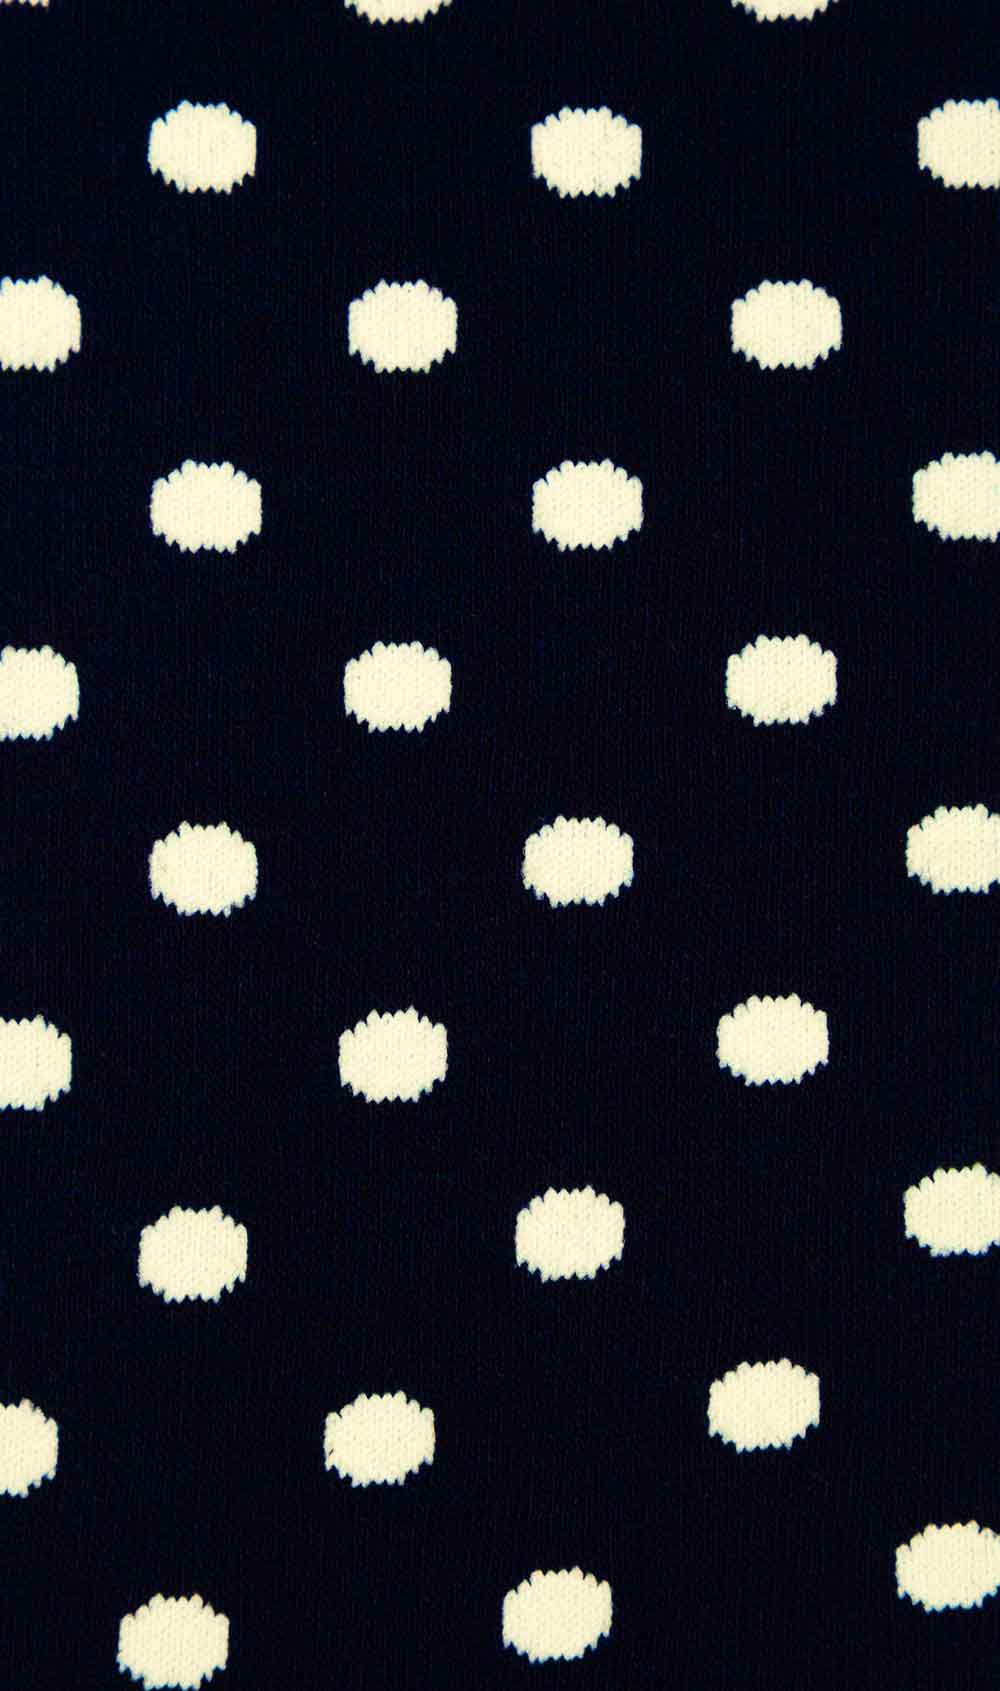 Midnight Blue on White Dot Socks Fabric